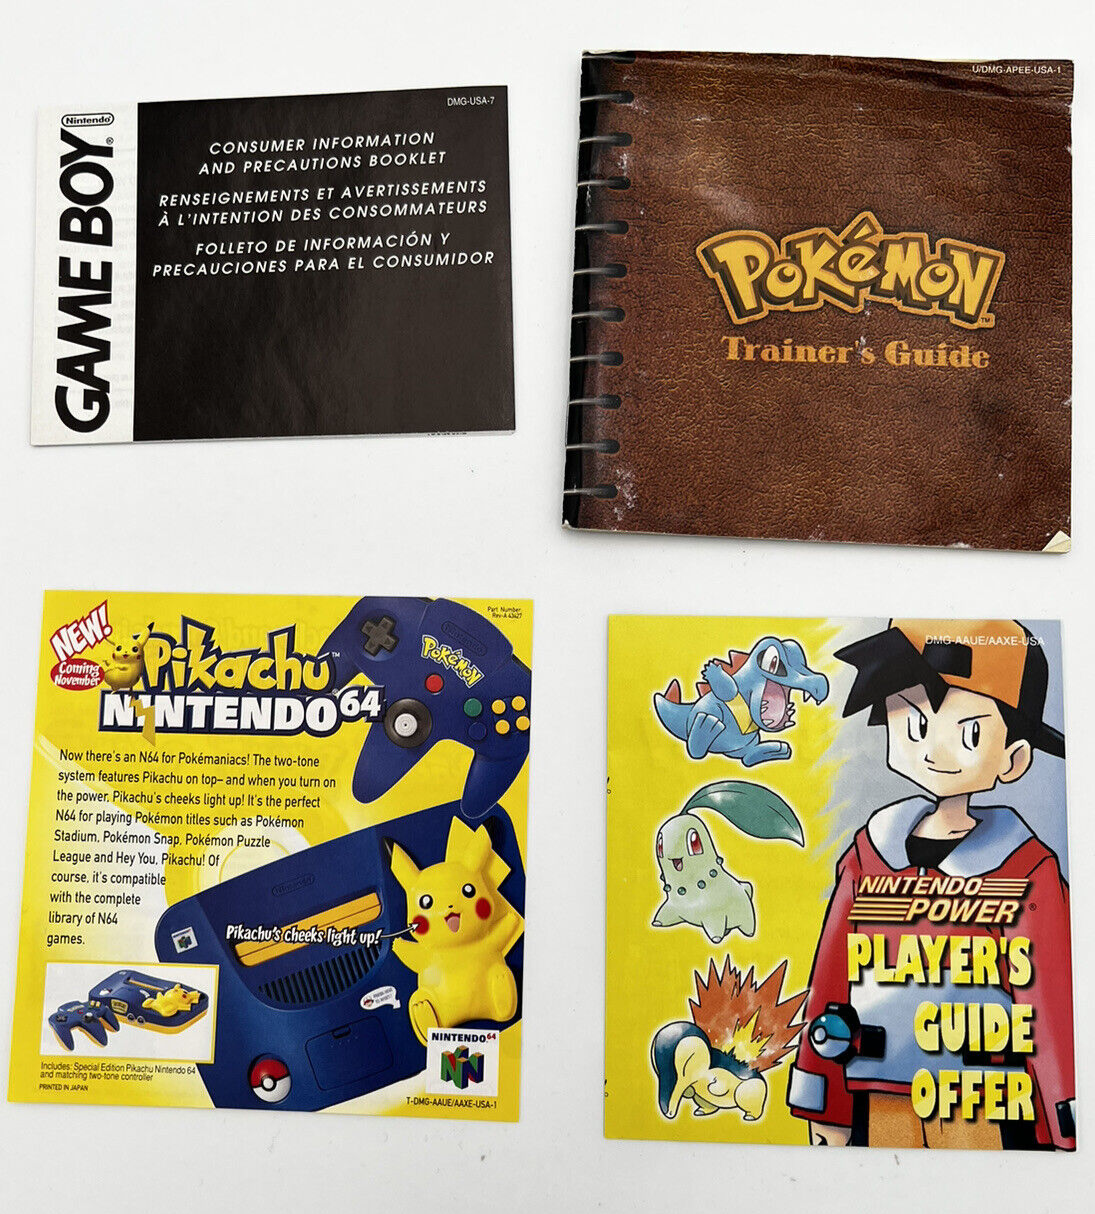 Pokemon Gold Version Nintendo Game Boy Color Video Game CIB Complete In Box 2000